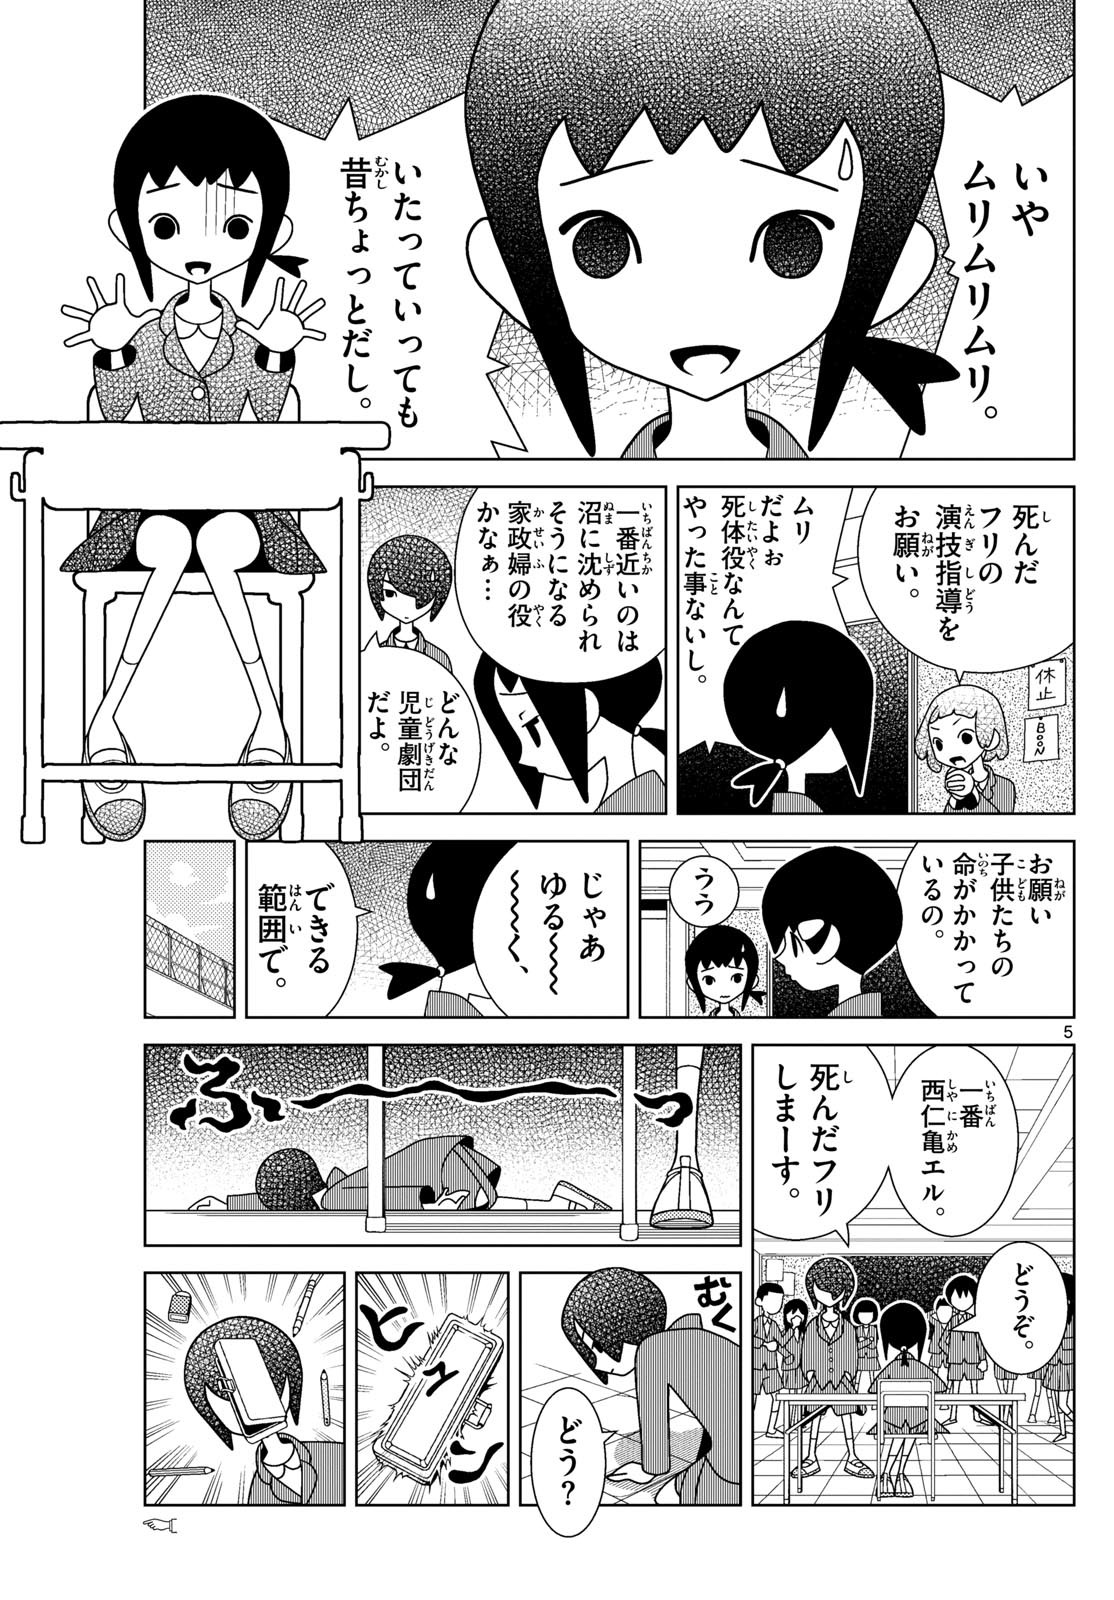 Shibuya Near Family - Chapter 082 - Page 5